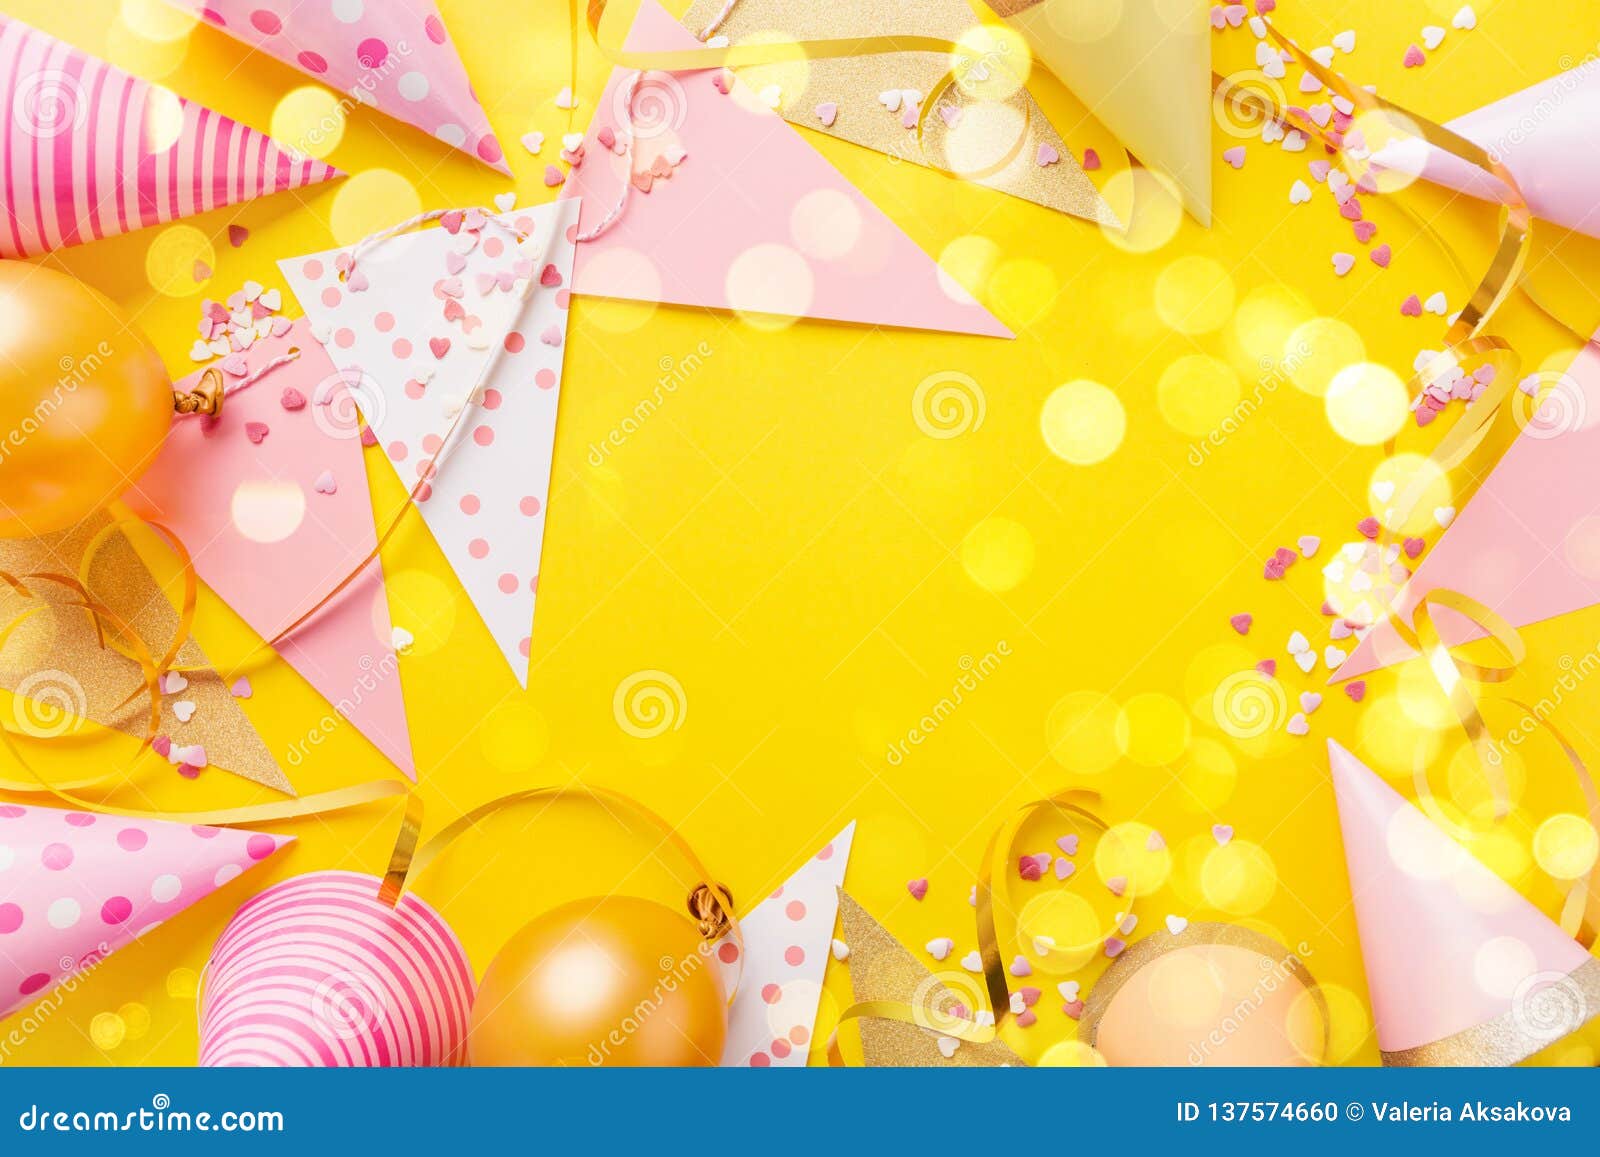 Birthday Party Background on Yellow Stock Photo - Image of background,  border: 137574660